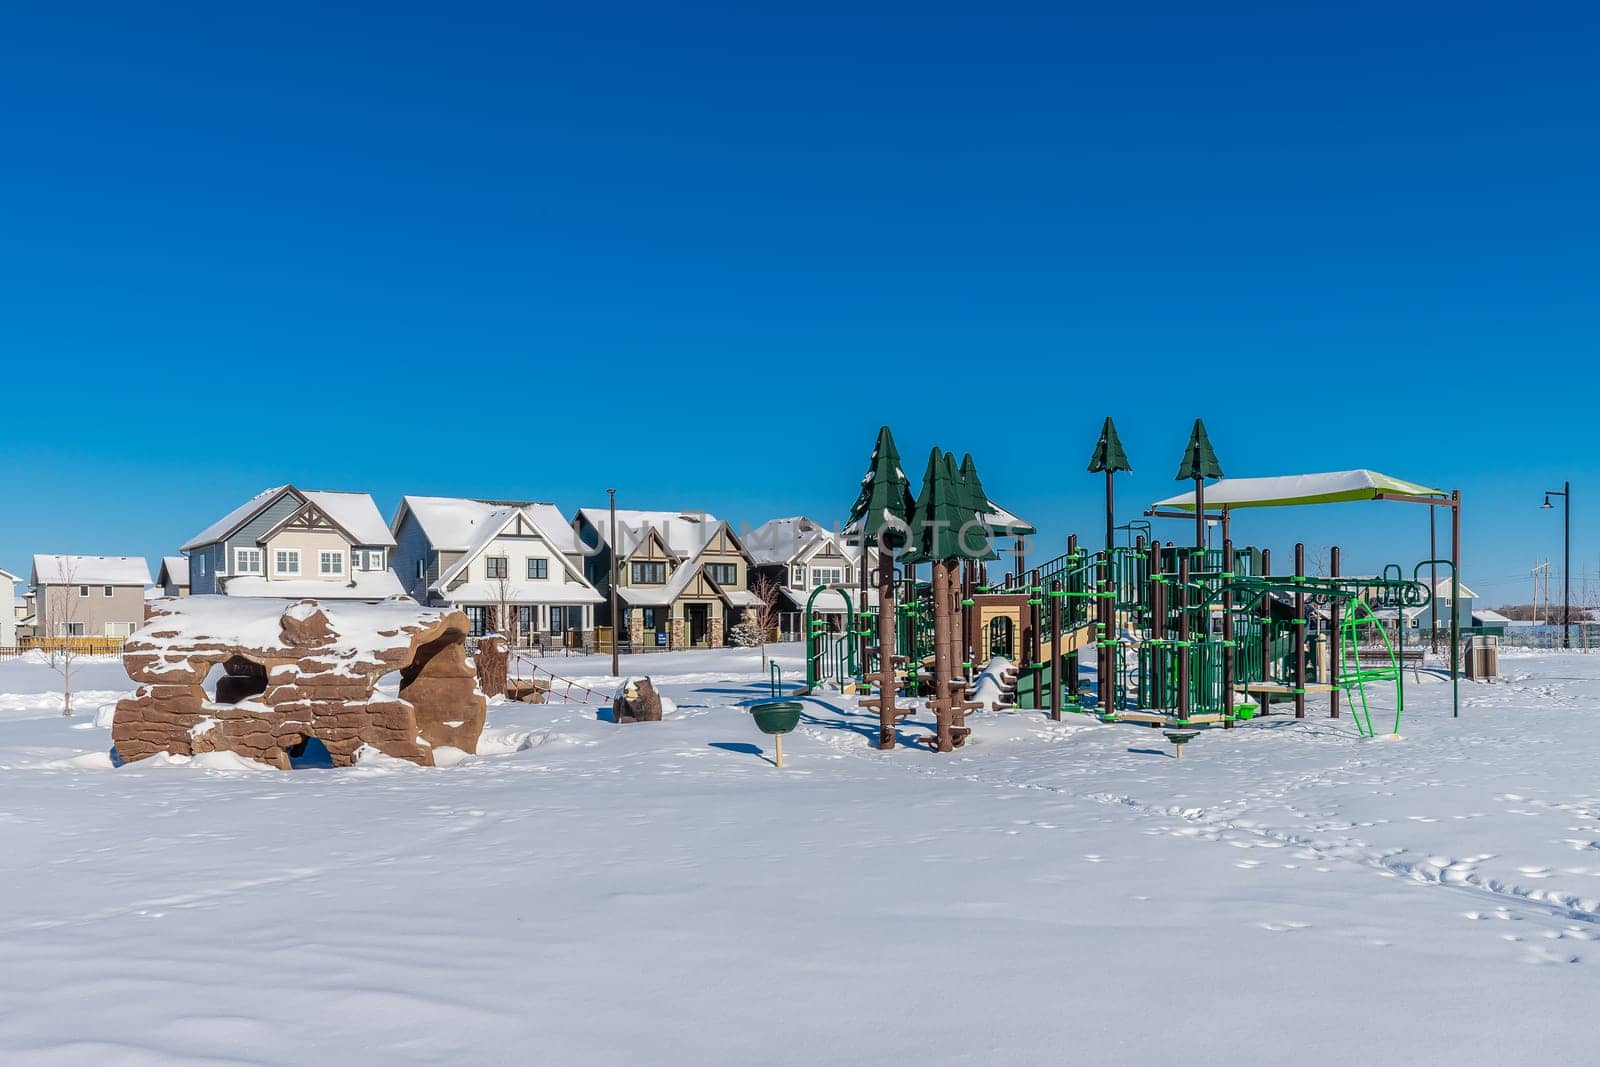 Bear Paw Park Winter Wonderland by sprokop